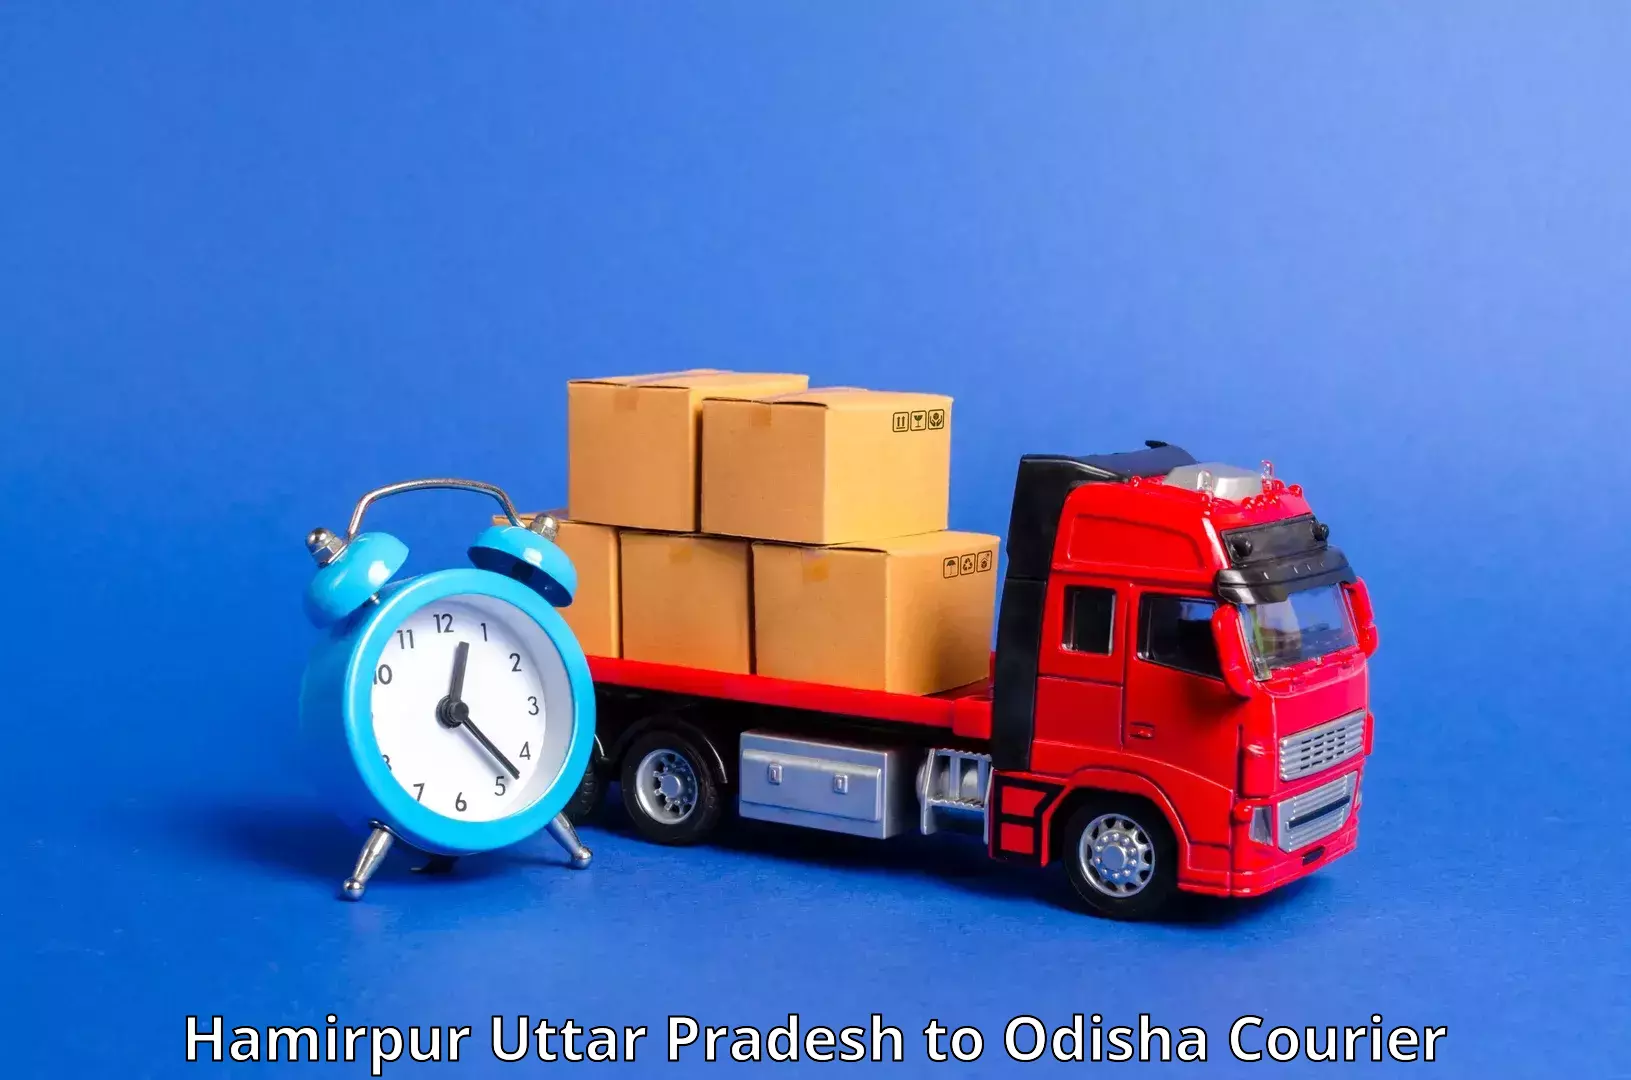 Delivery service partnership Hamirpur Uttar Pradesh to Odisha